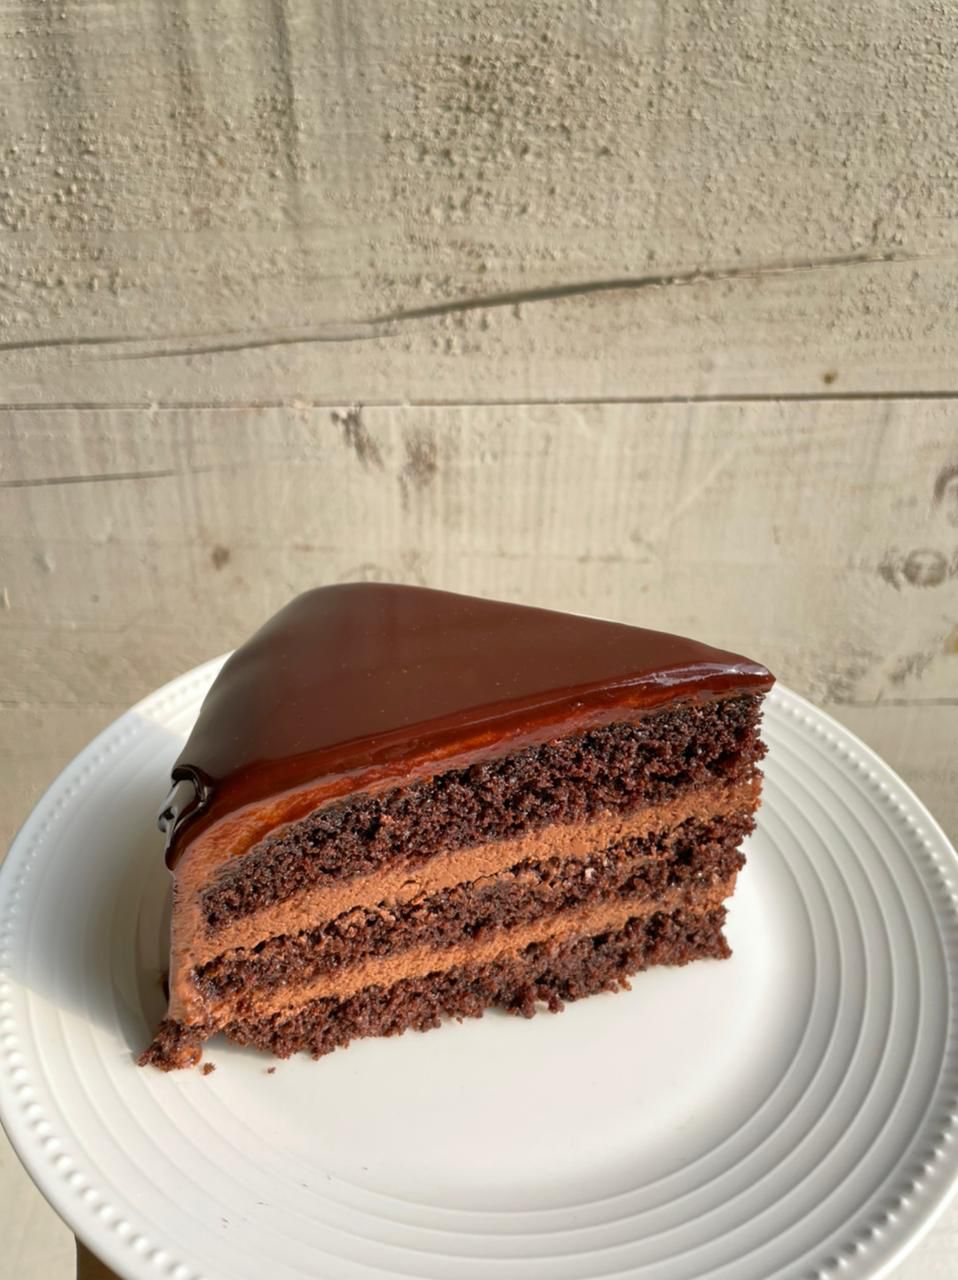 TRIPLE CHOCOLATE MOUSSE CAKE